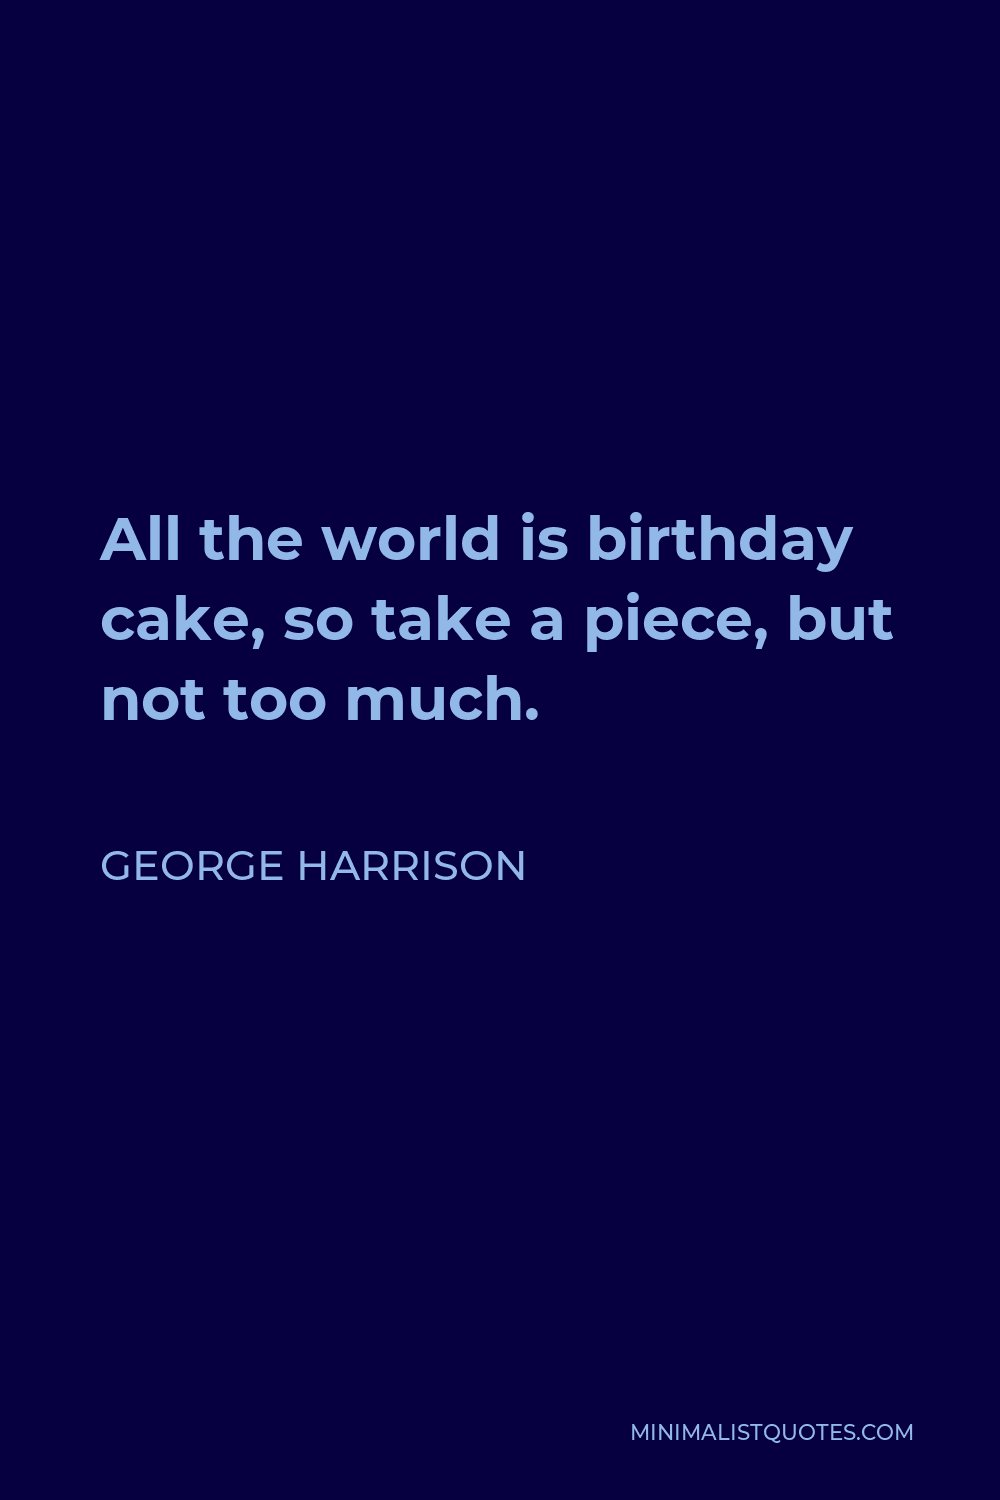 Happy Birthday Harrison! - Cake 🎂 - Greetings Cards for Birthday for  Harrison - messageswishesgreetings.com